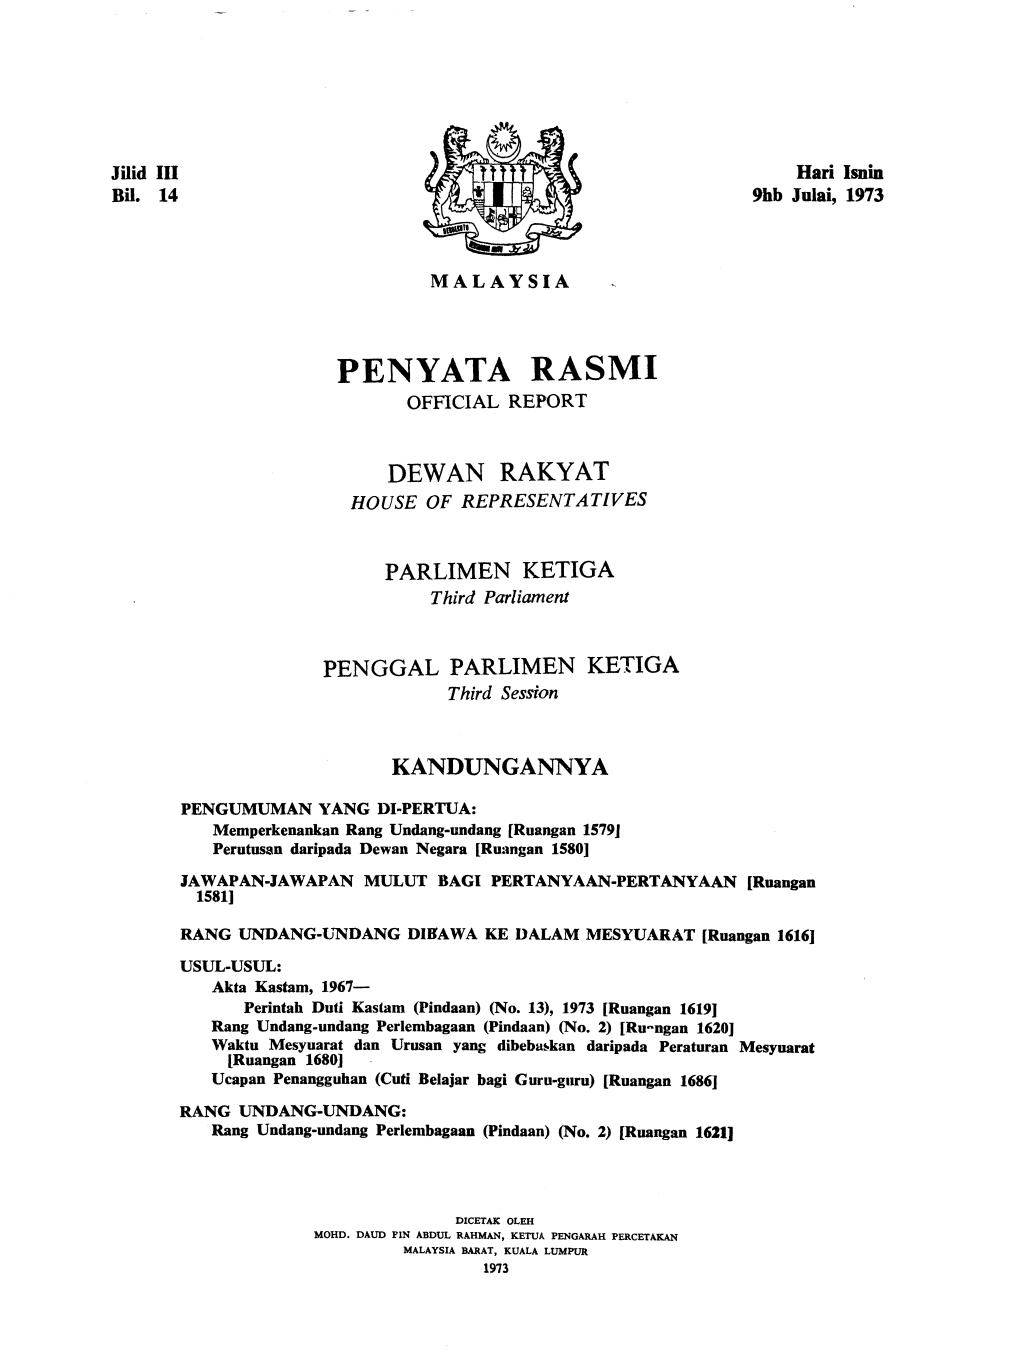 Penyata Rasmi Official Report